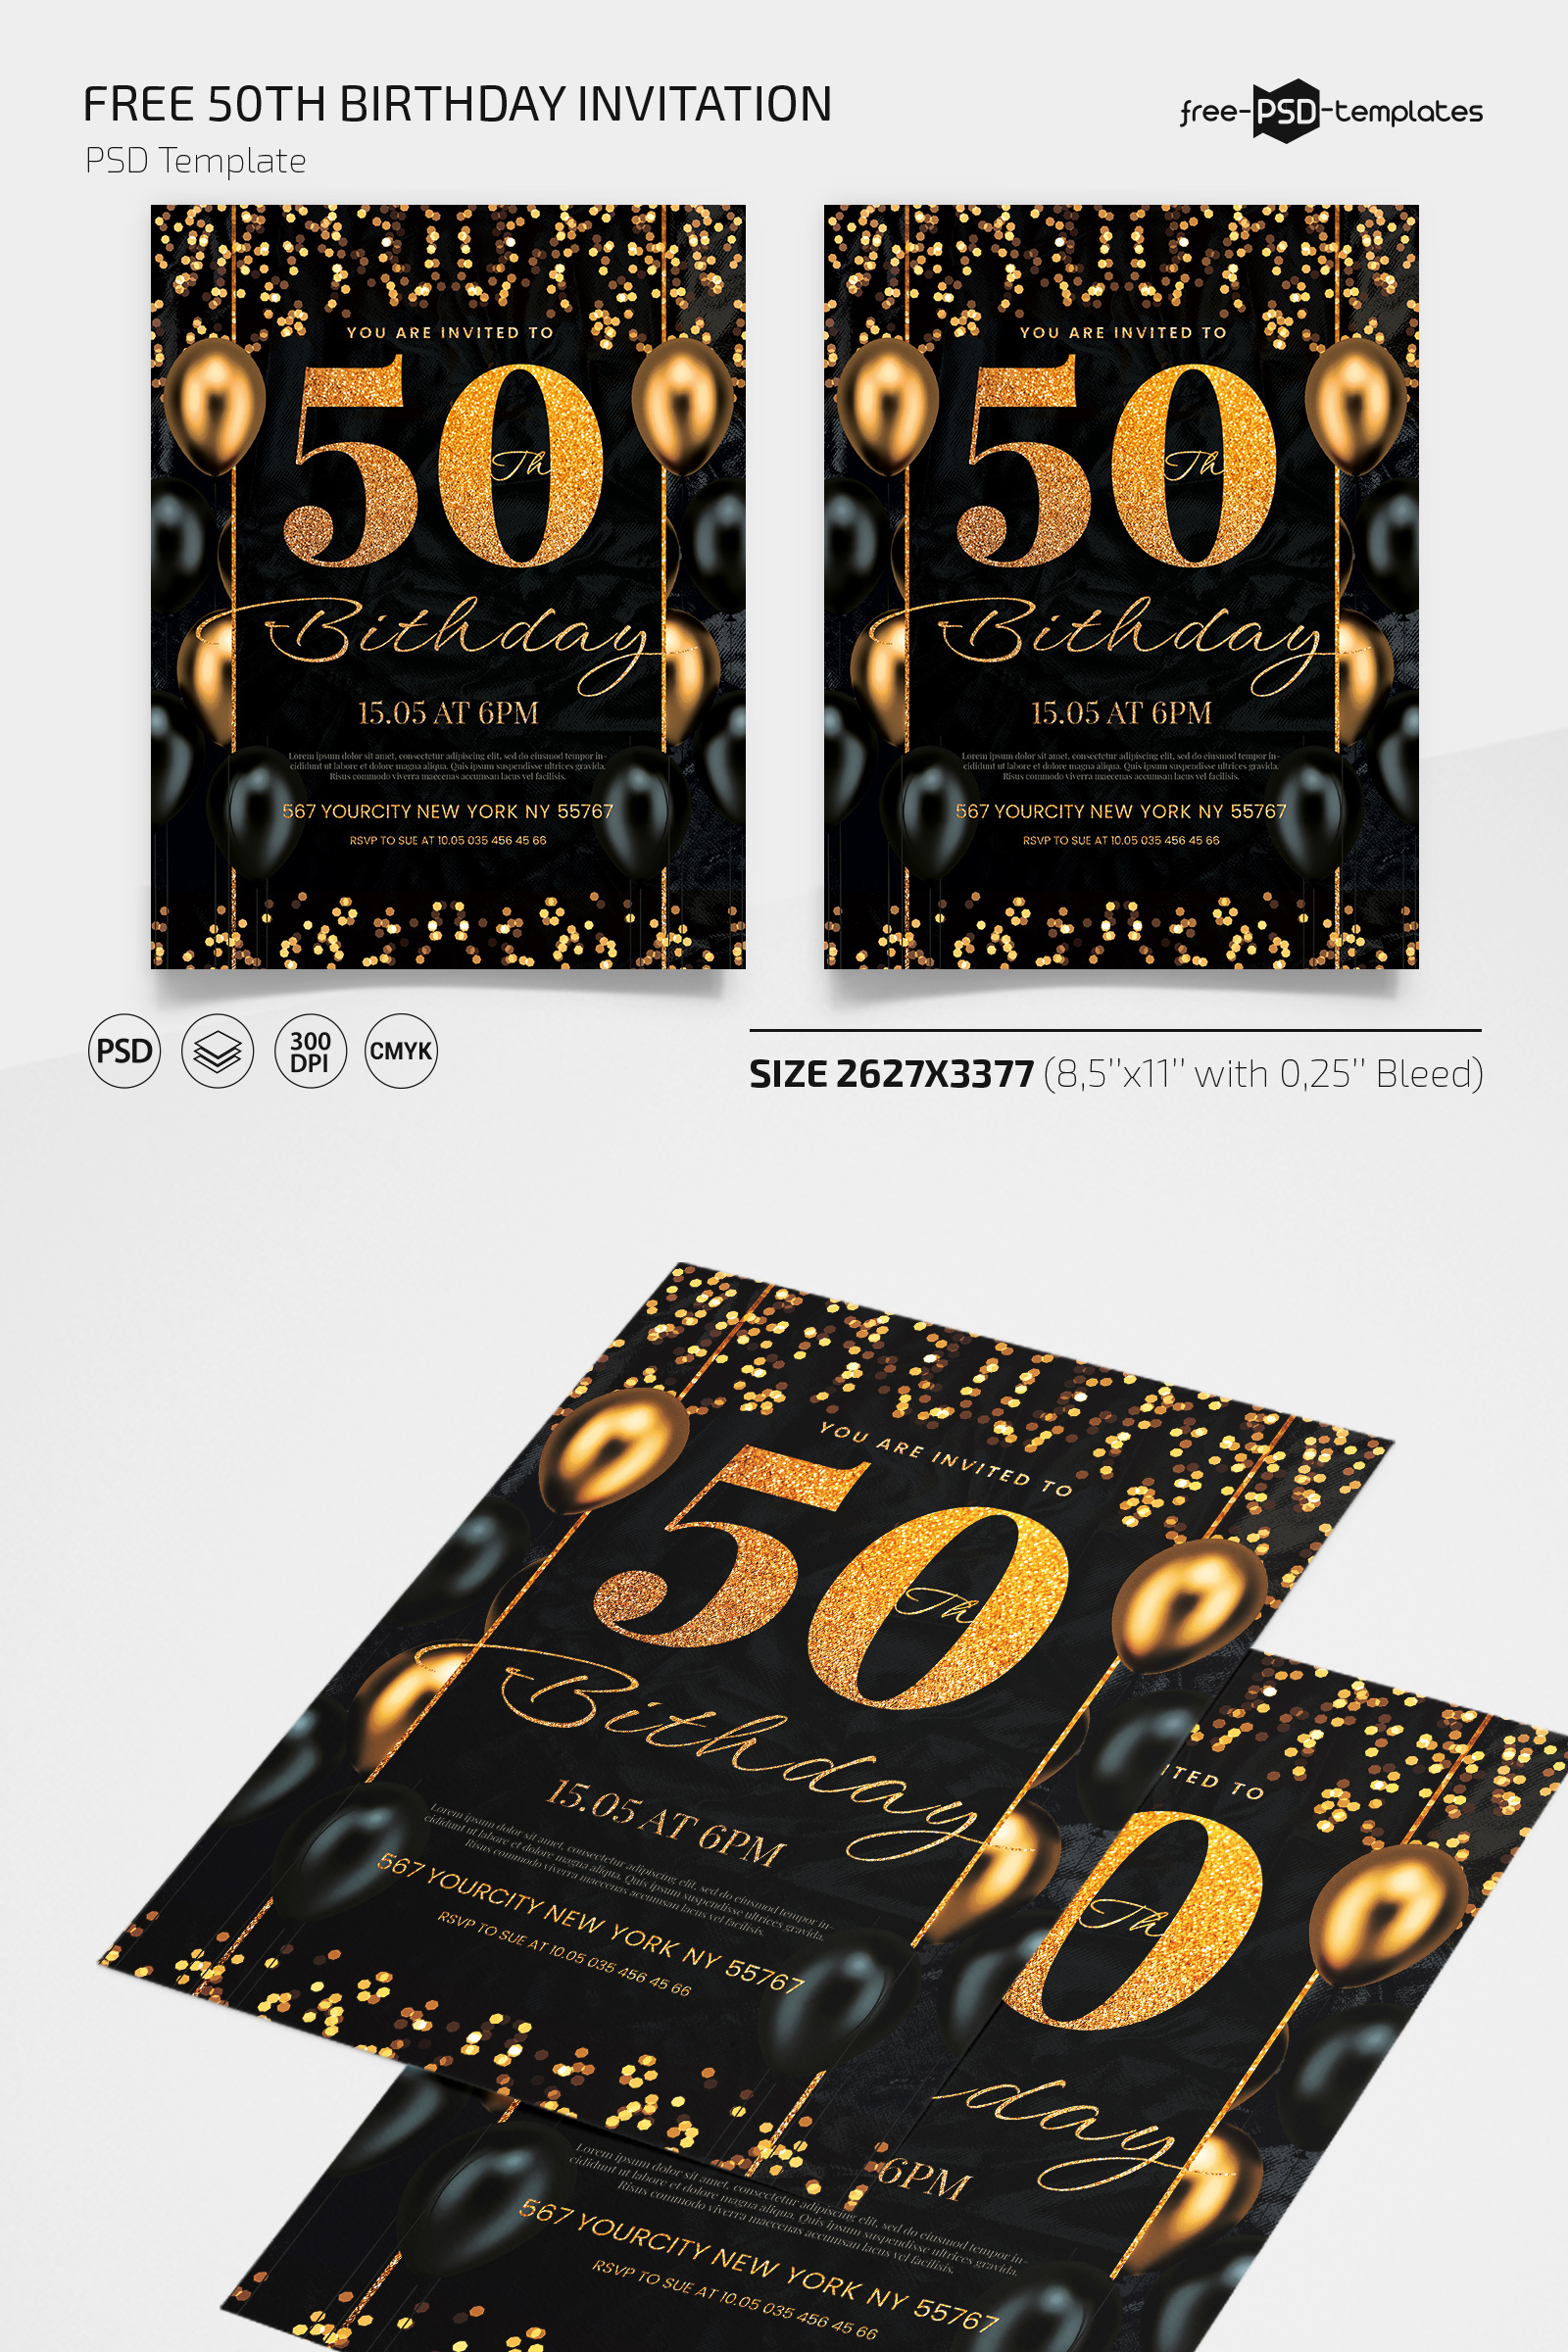 Free 50th Birthday Invitation – Free PSD Templates